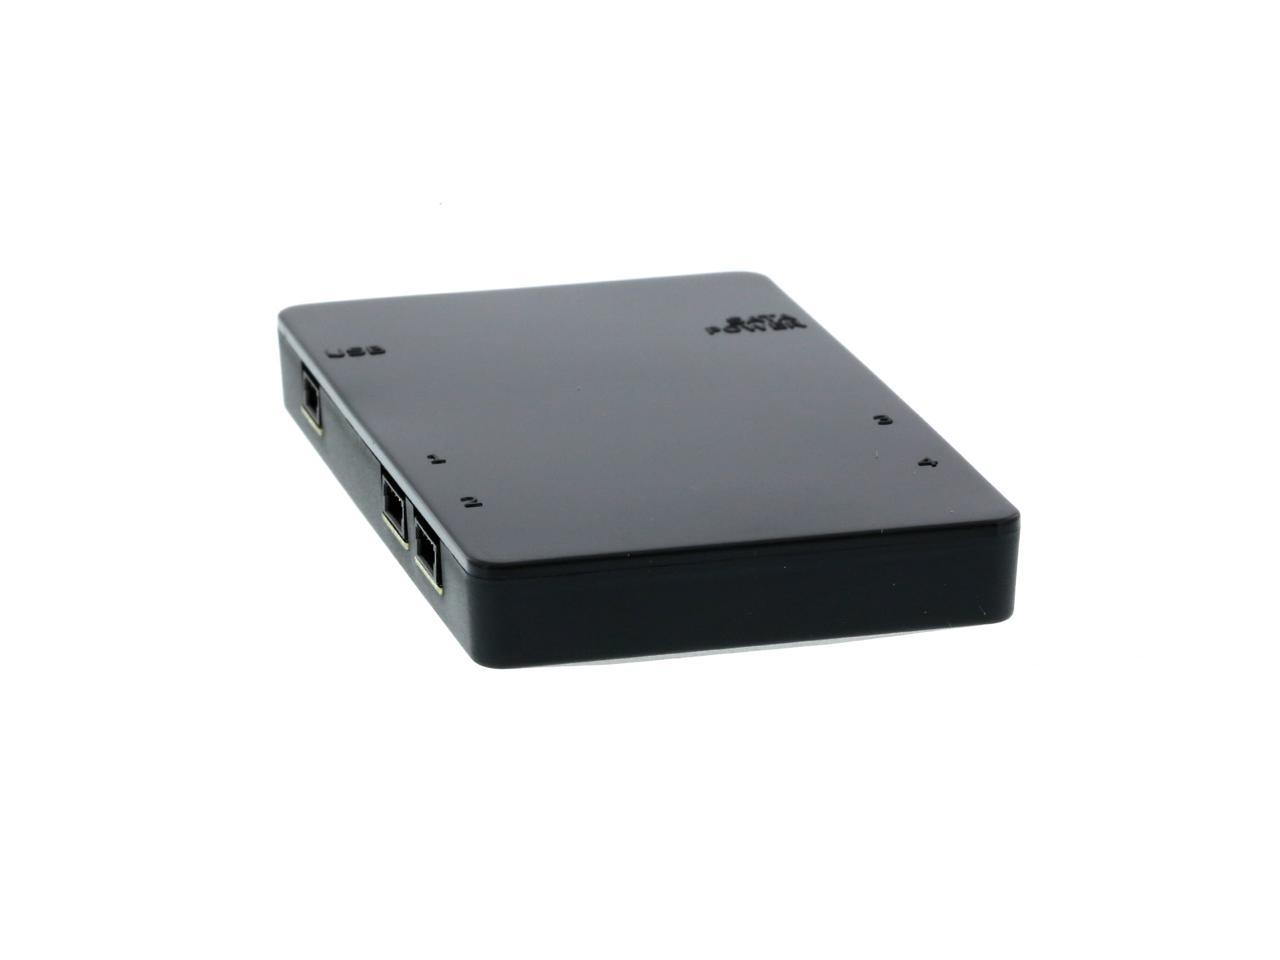 Cooler Master RGB Controller/Hub for Computer Case Fans - Newegg.com